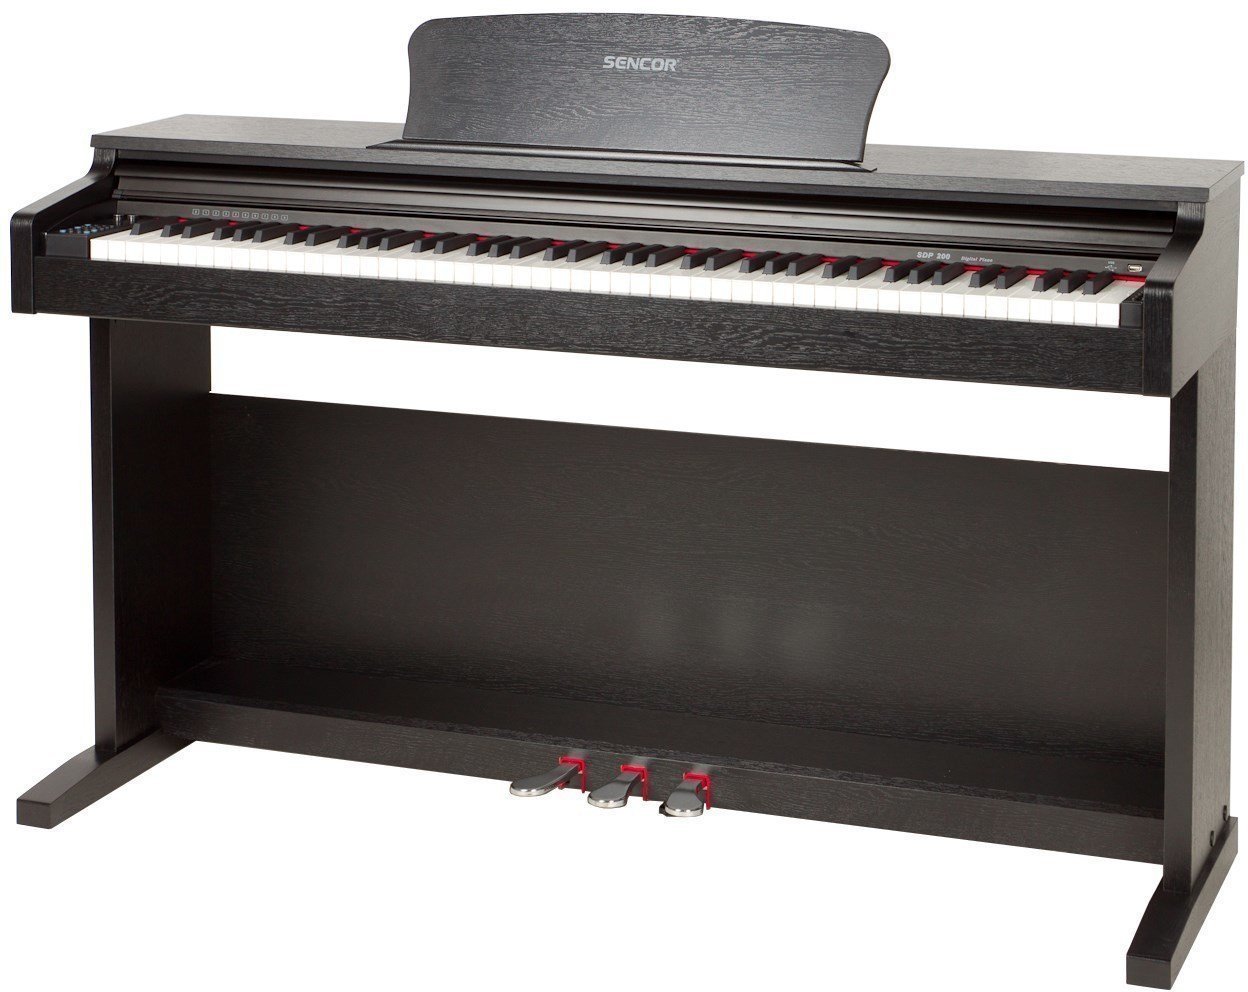 Digitale piano SENCOR SDP 200 Black Digitale piano